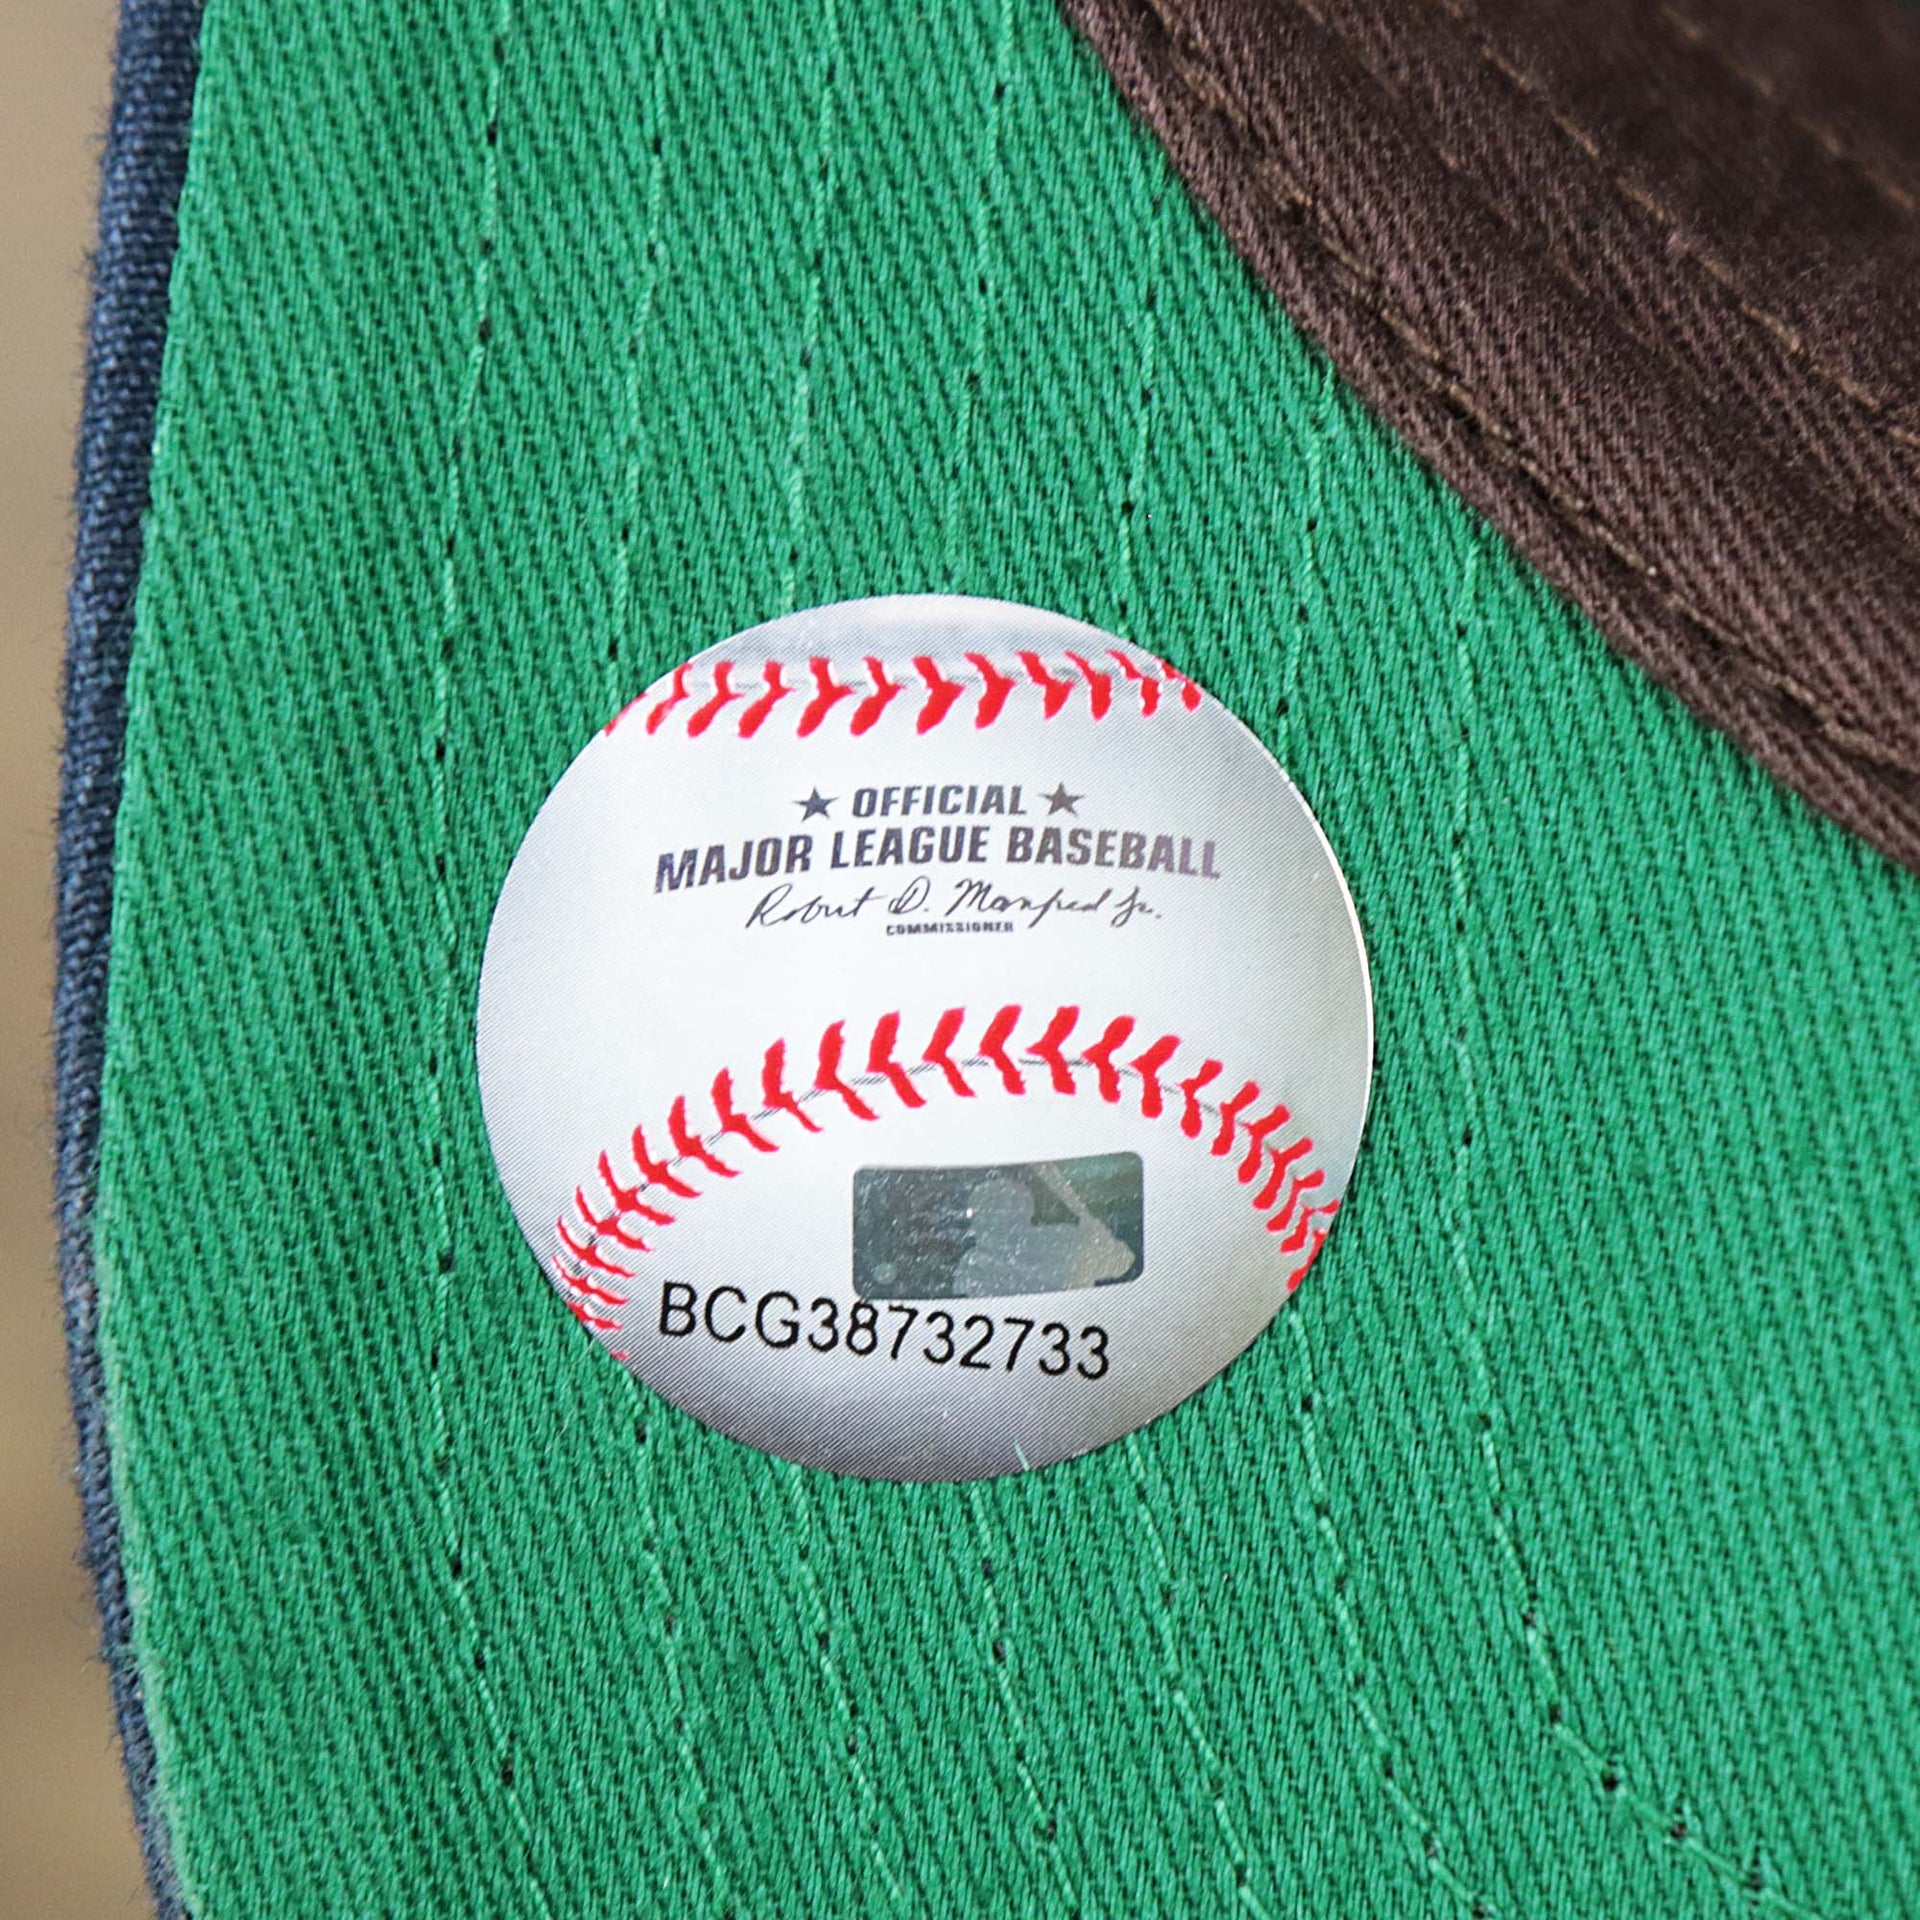 The MLB Sticker on the Cooperstown New York Yankees Felt Yankees Logo Snapback Hat | Navy Snapback Cap